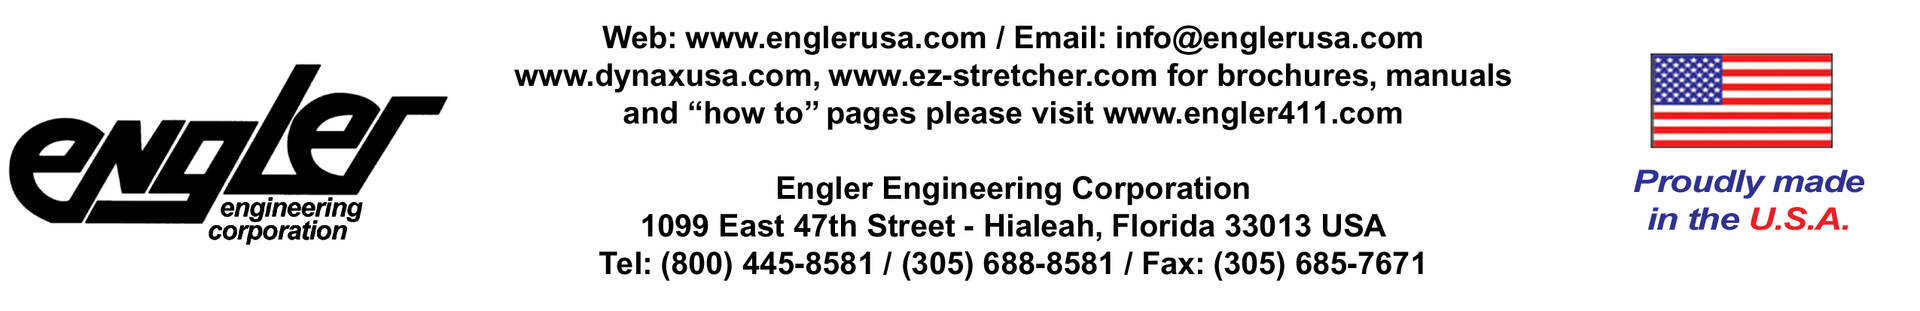 Engler Engineering Corporation